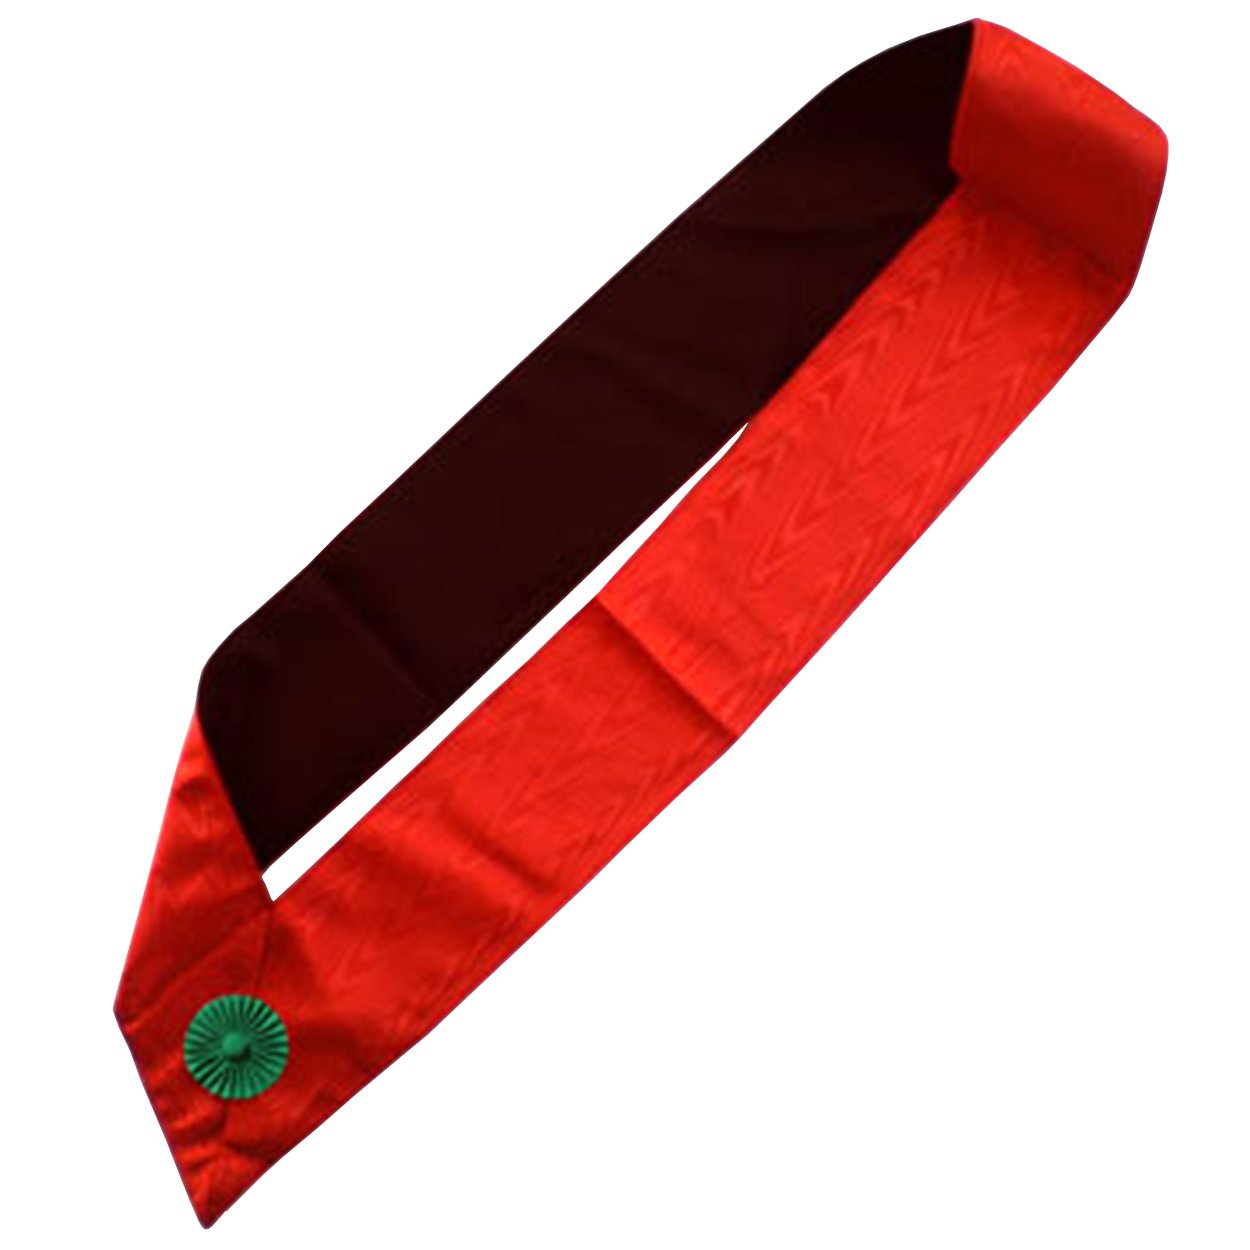 8th Degree Scottish Rite Sash - Red Moire with Green Rosette - Bricks Masons